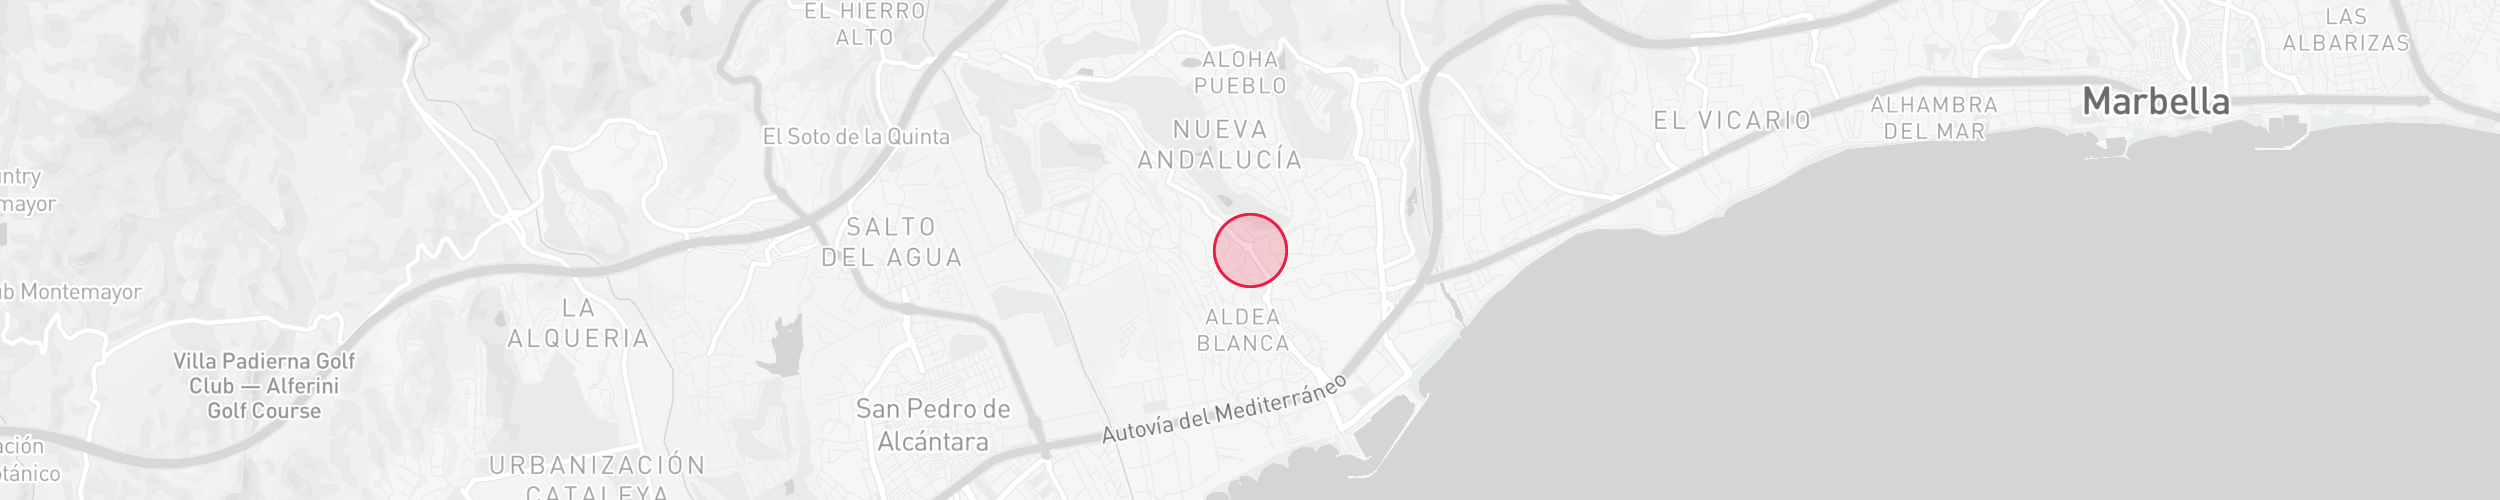 Property Location Map - Nueva Andalucia